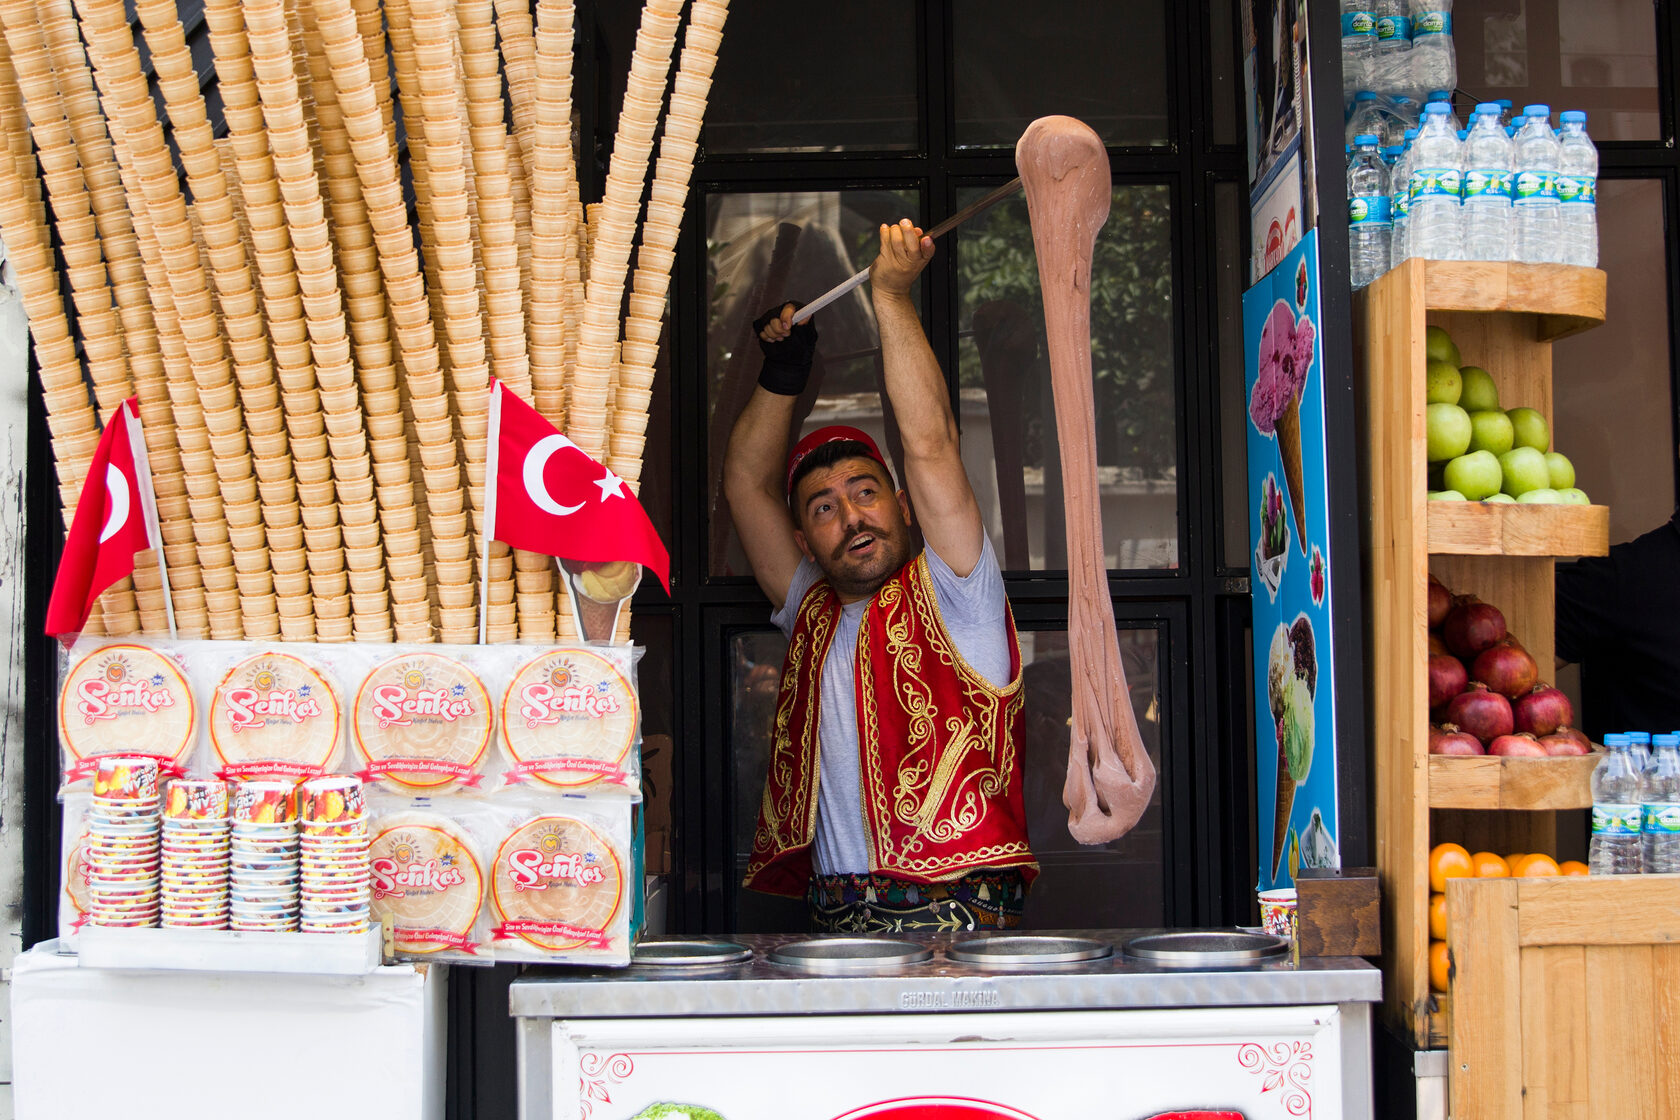 Турецкое Мороженое Тягучее